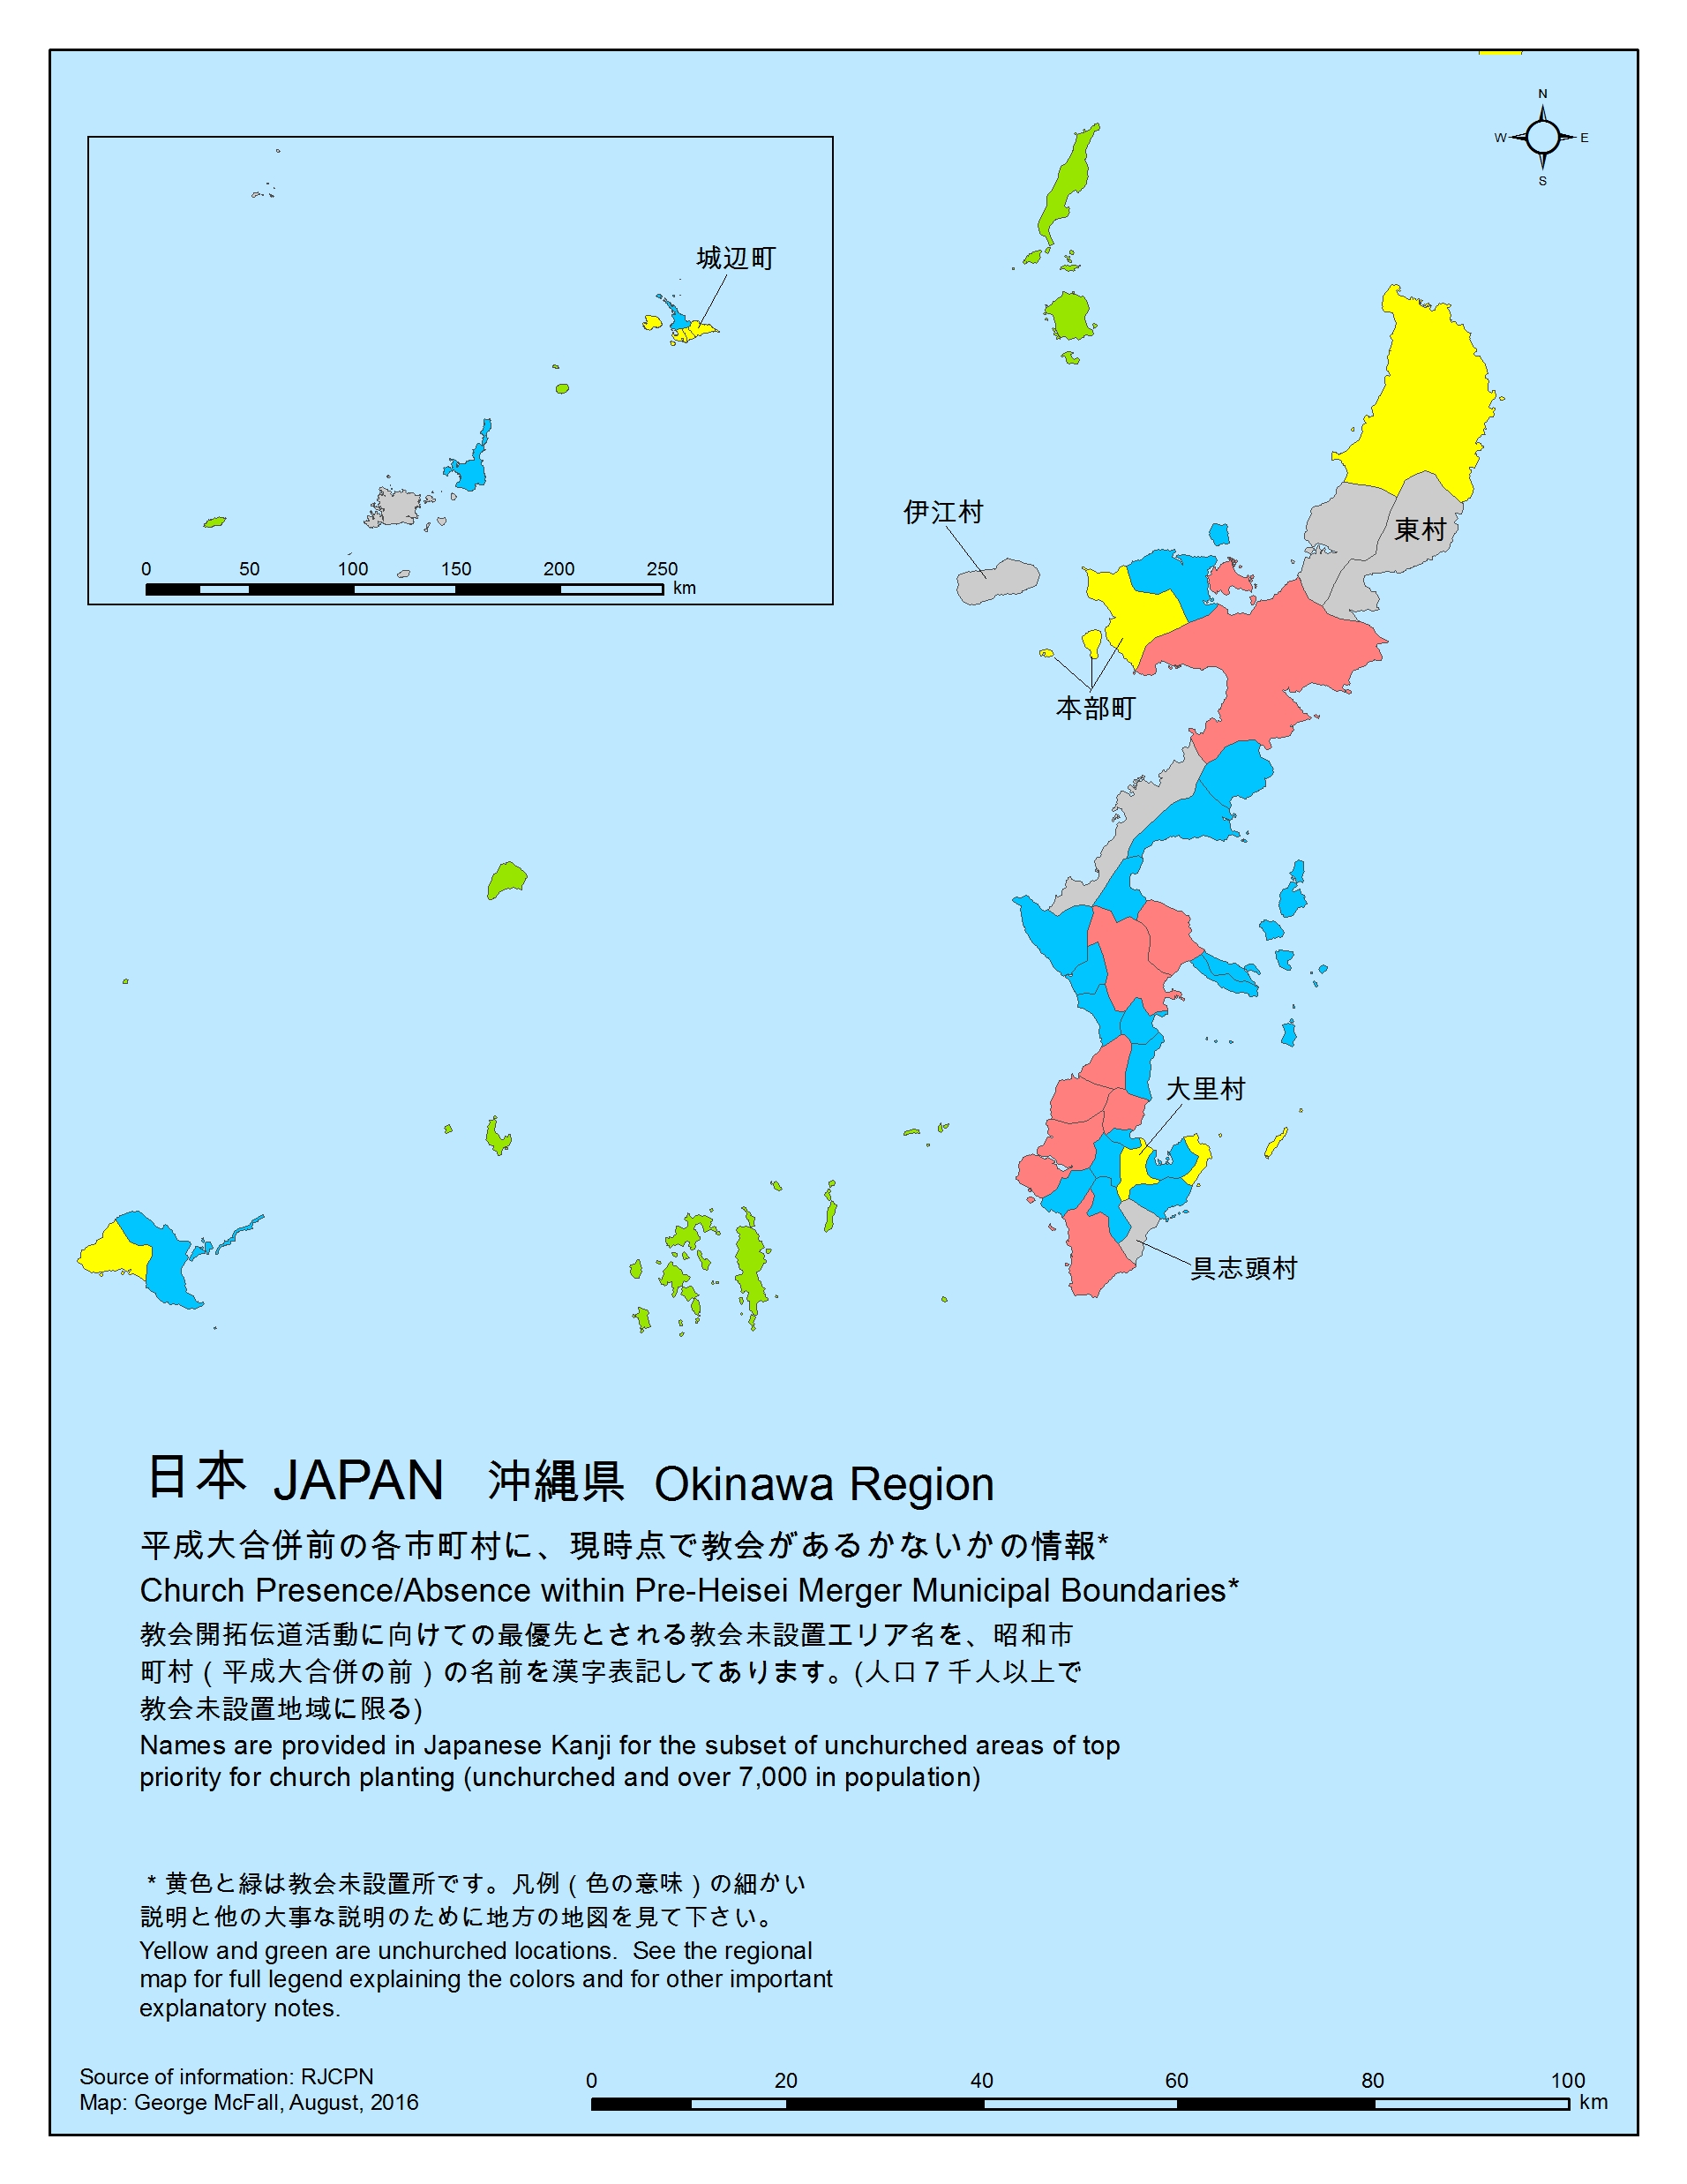 Okinawa Region Rural Japan Church Planting Network 5039